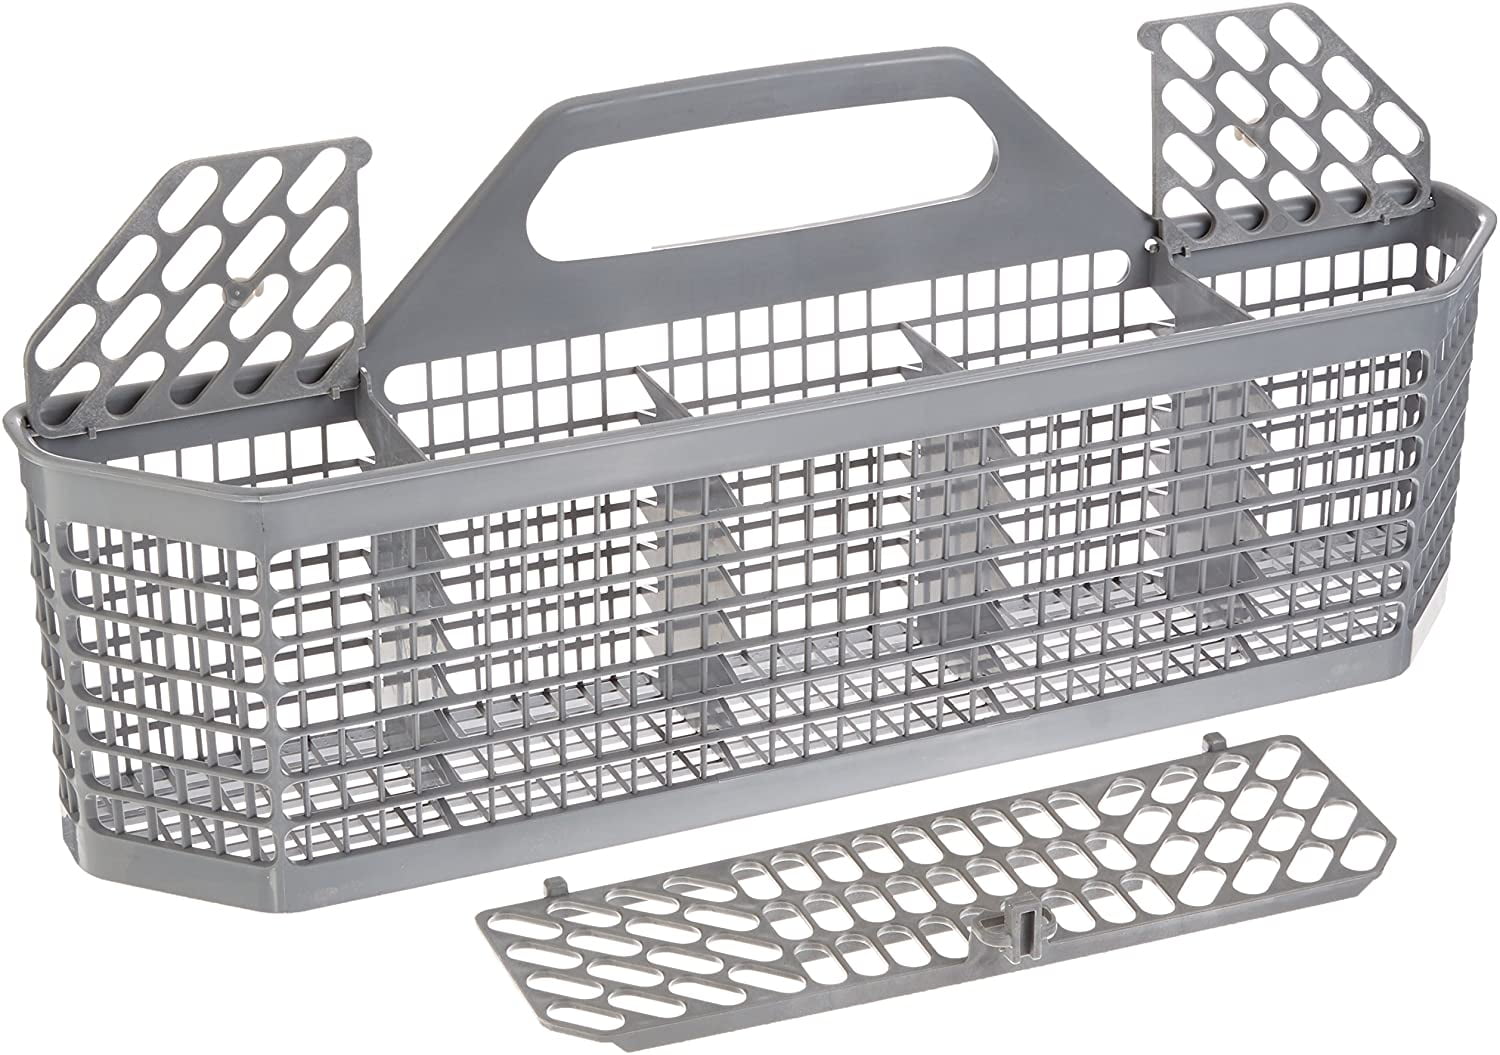 ge dishwasher cutlery basket